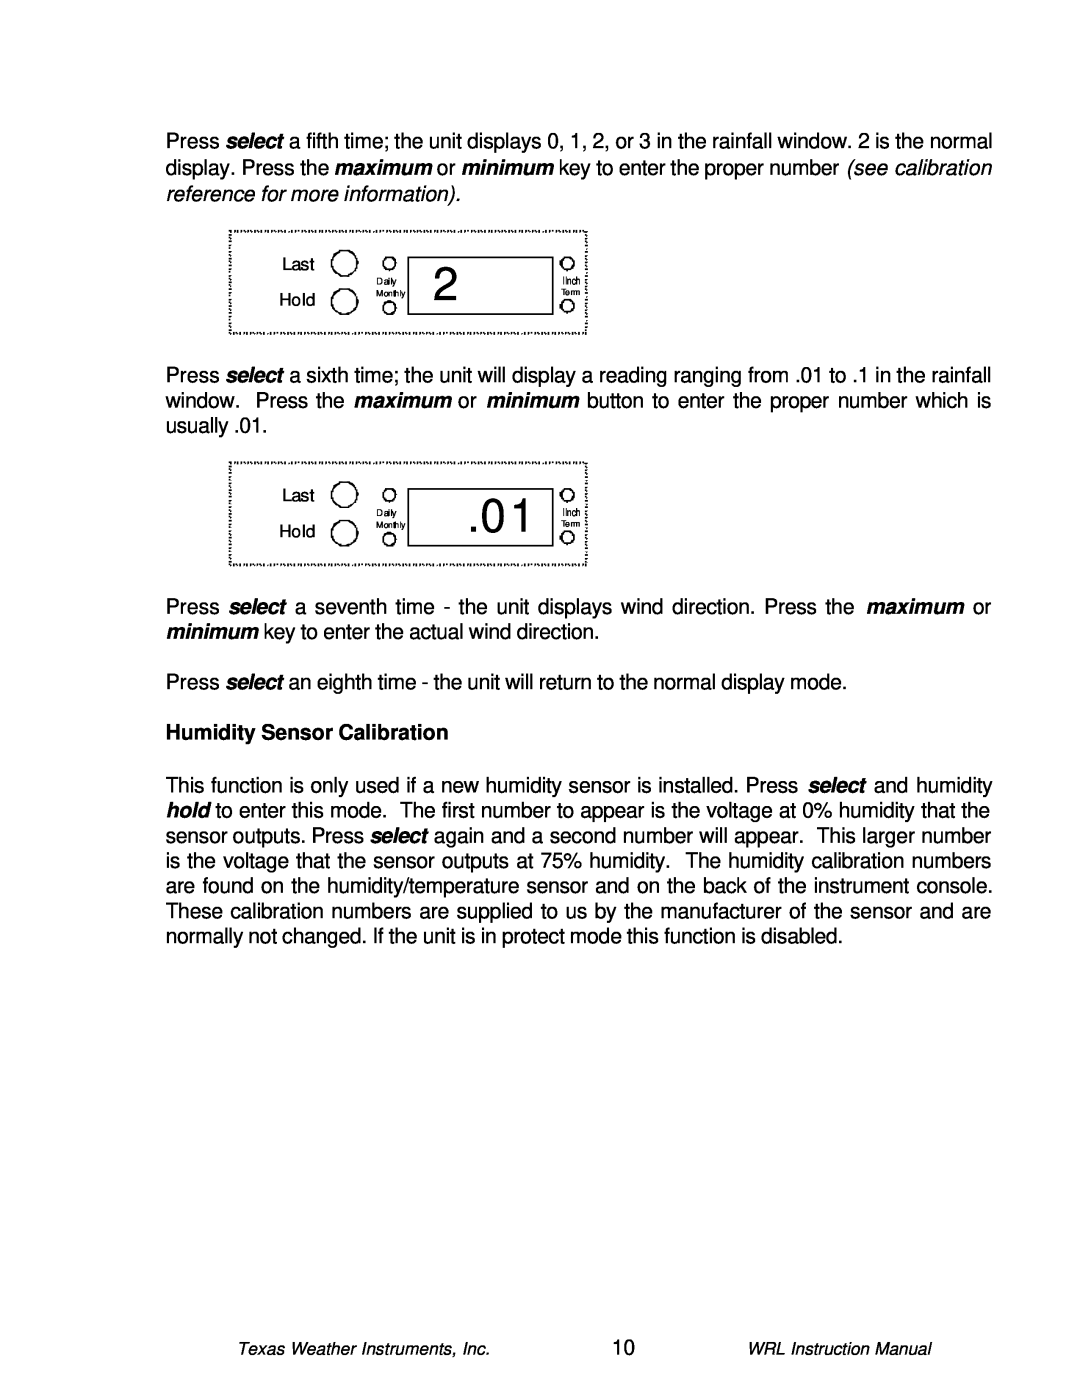 Texas Instruments WRL-10 instruction manual Humidity Sensor Calibration 